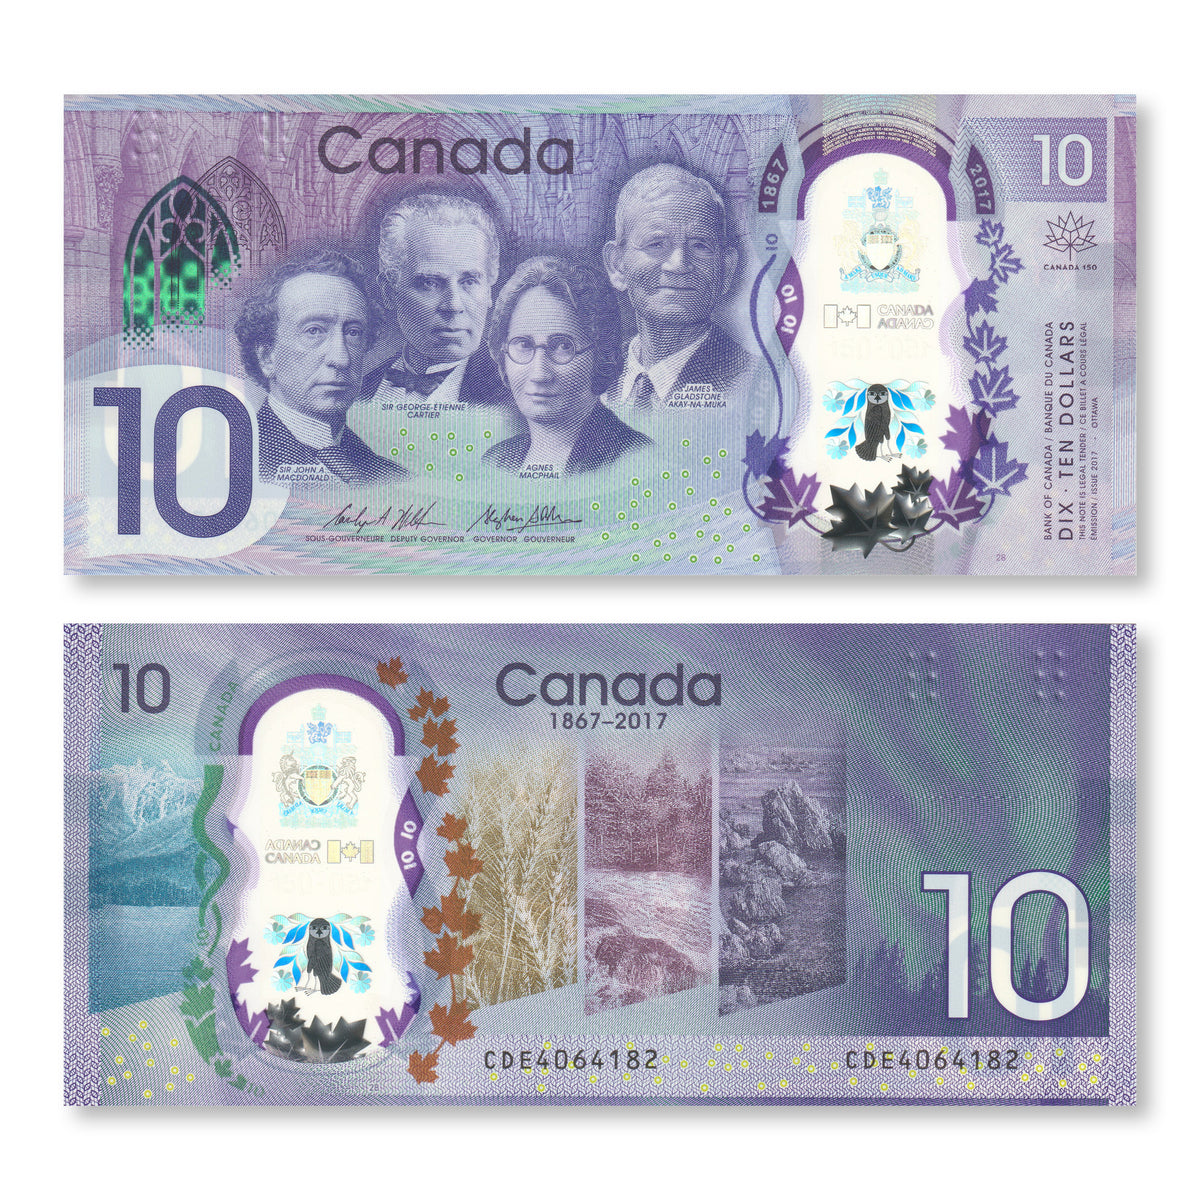 Canada 10 Dollars, 2017, B377a, P112, UNC - Robert's World Money - World Banknotes